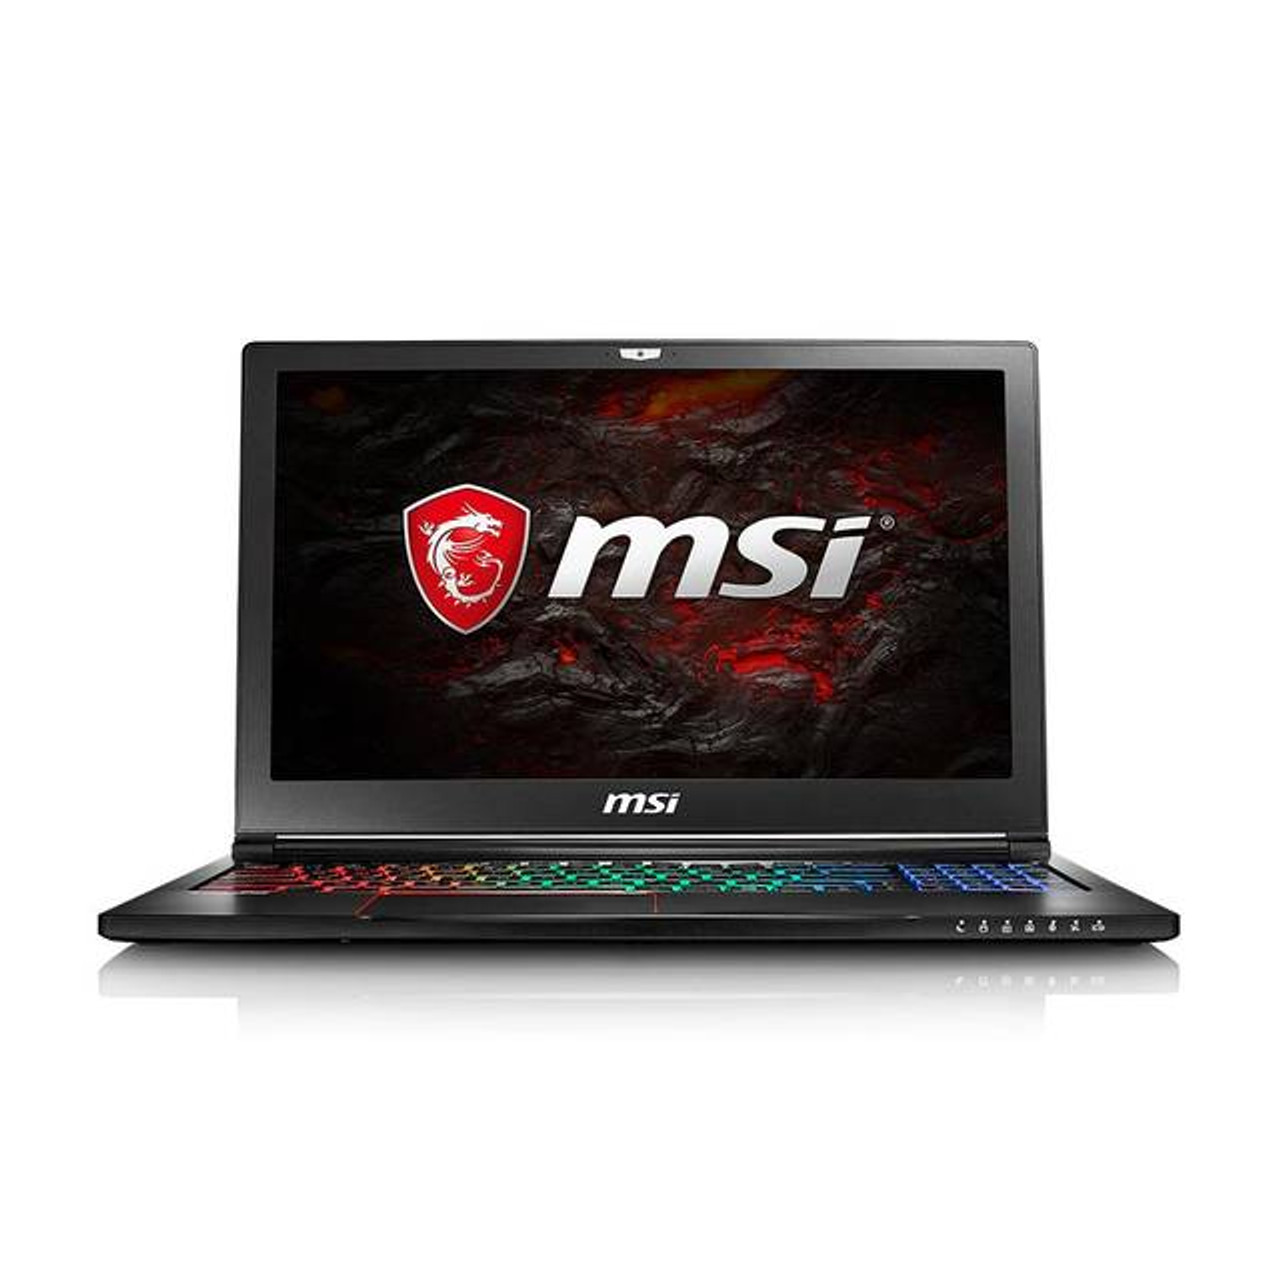 MSI GS63VR STEALTH PRO-229 15.6 inch Intel Core i7-7700HQ 2.8GHz/ 32GB DDR4/ 1TB HDD + 512GB PCI-E SSD/ GTX 1060/ USB3.0/ Windows 10 Pro Ultrabook (Aluminum Black)